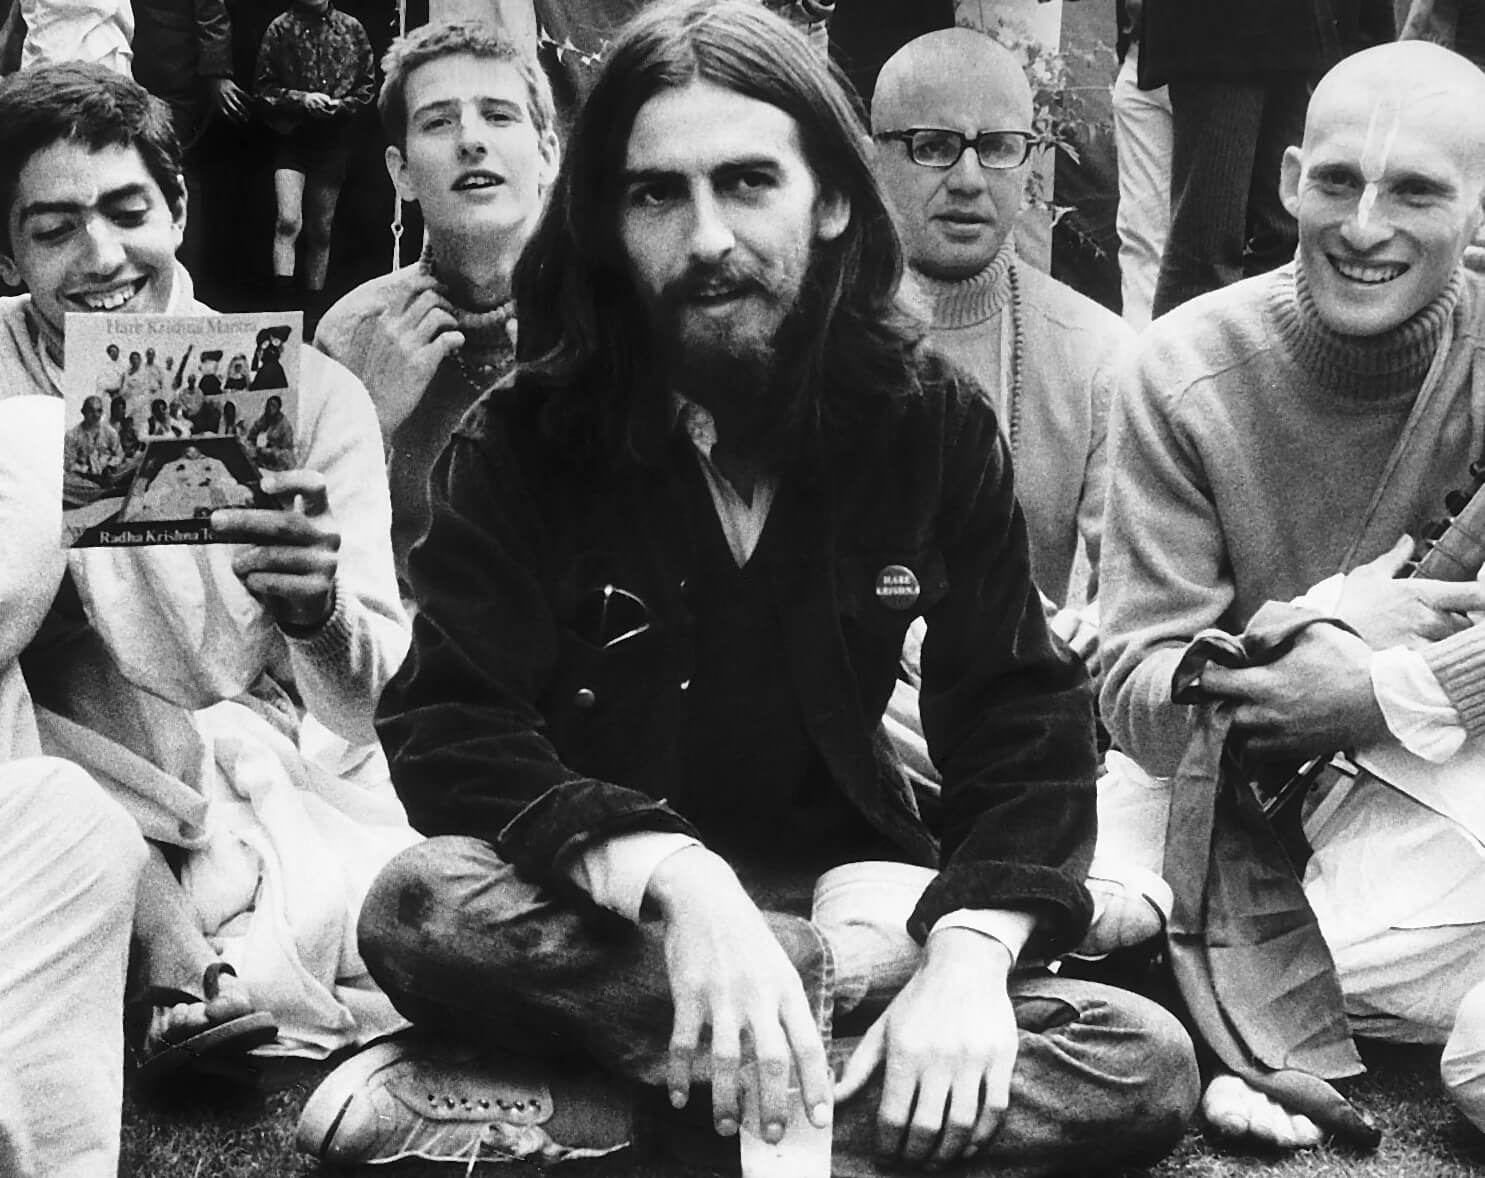 The Beatles' George Harrison with Hare Krishnas